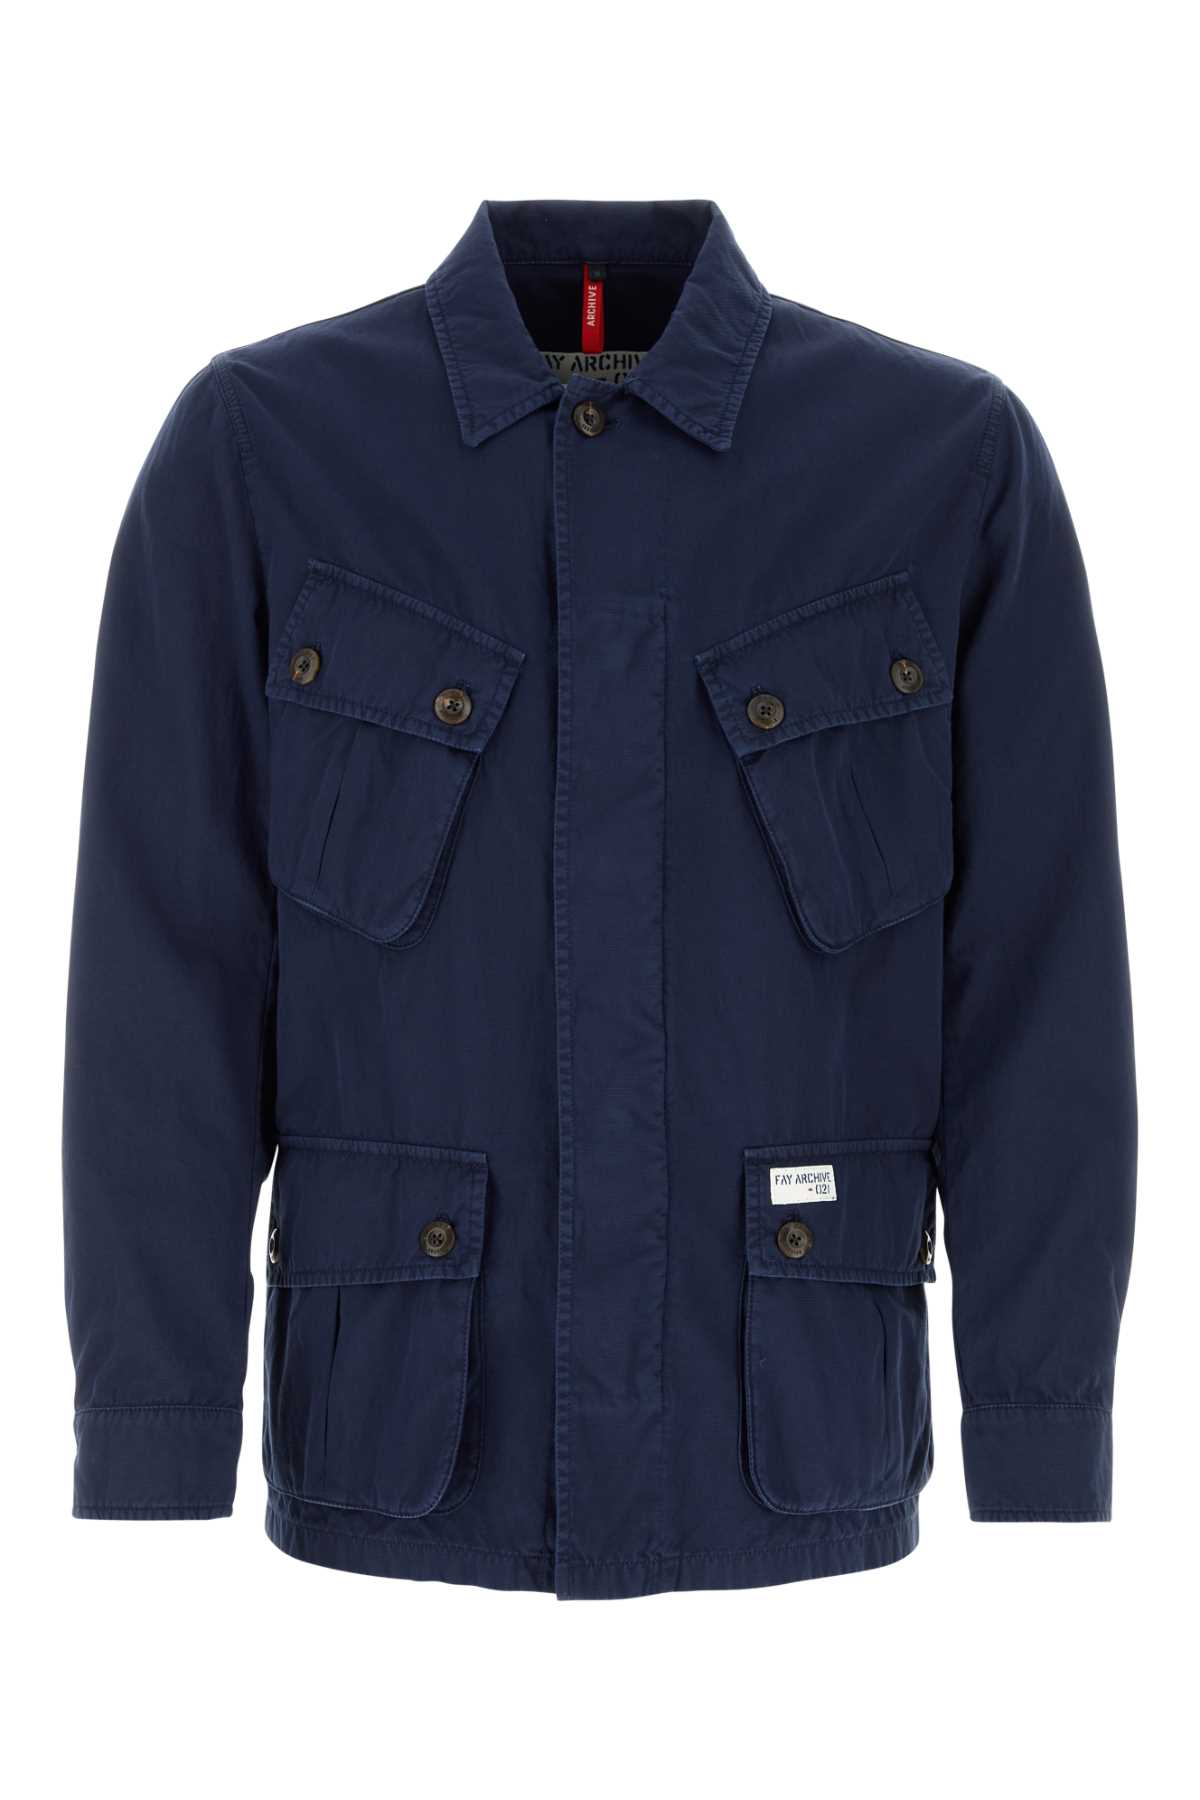 Navy Blue Cotton Blend Jacket